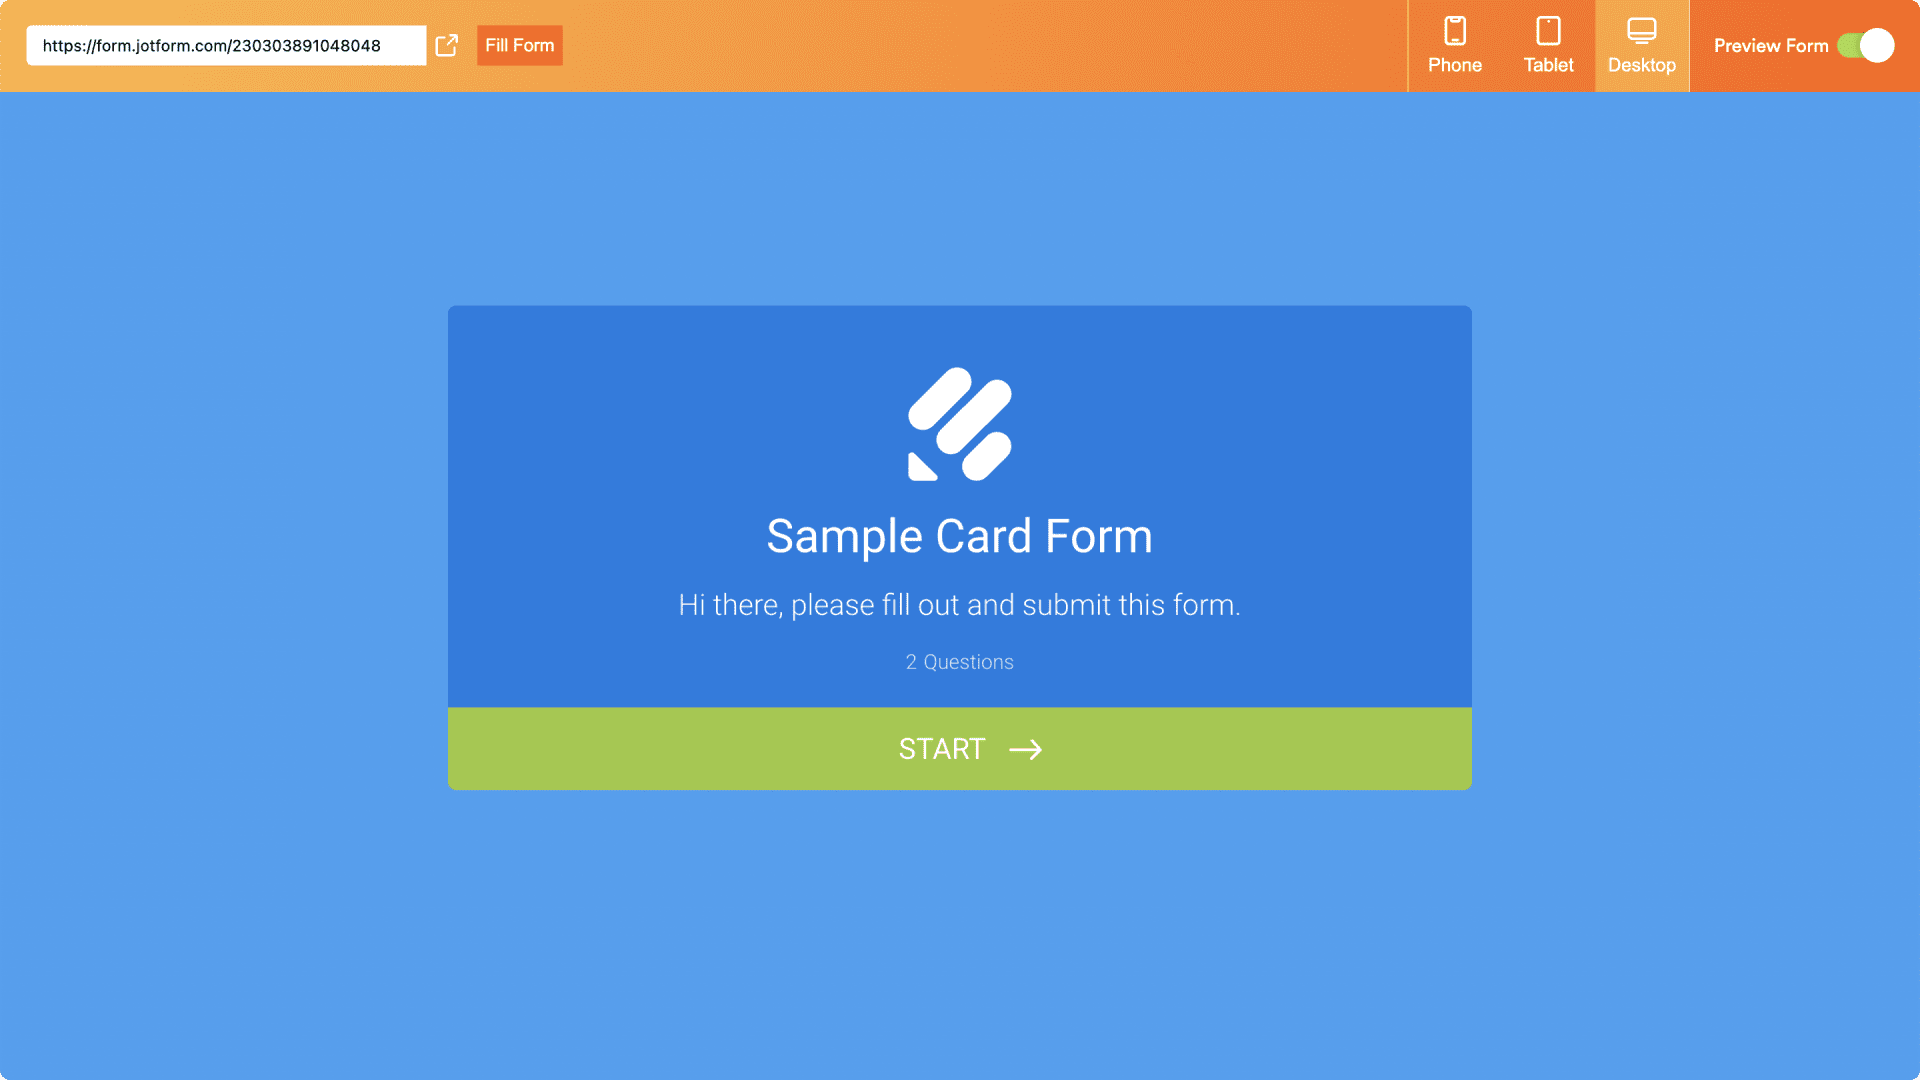 Sample card form